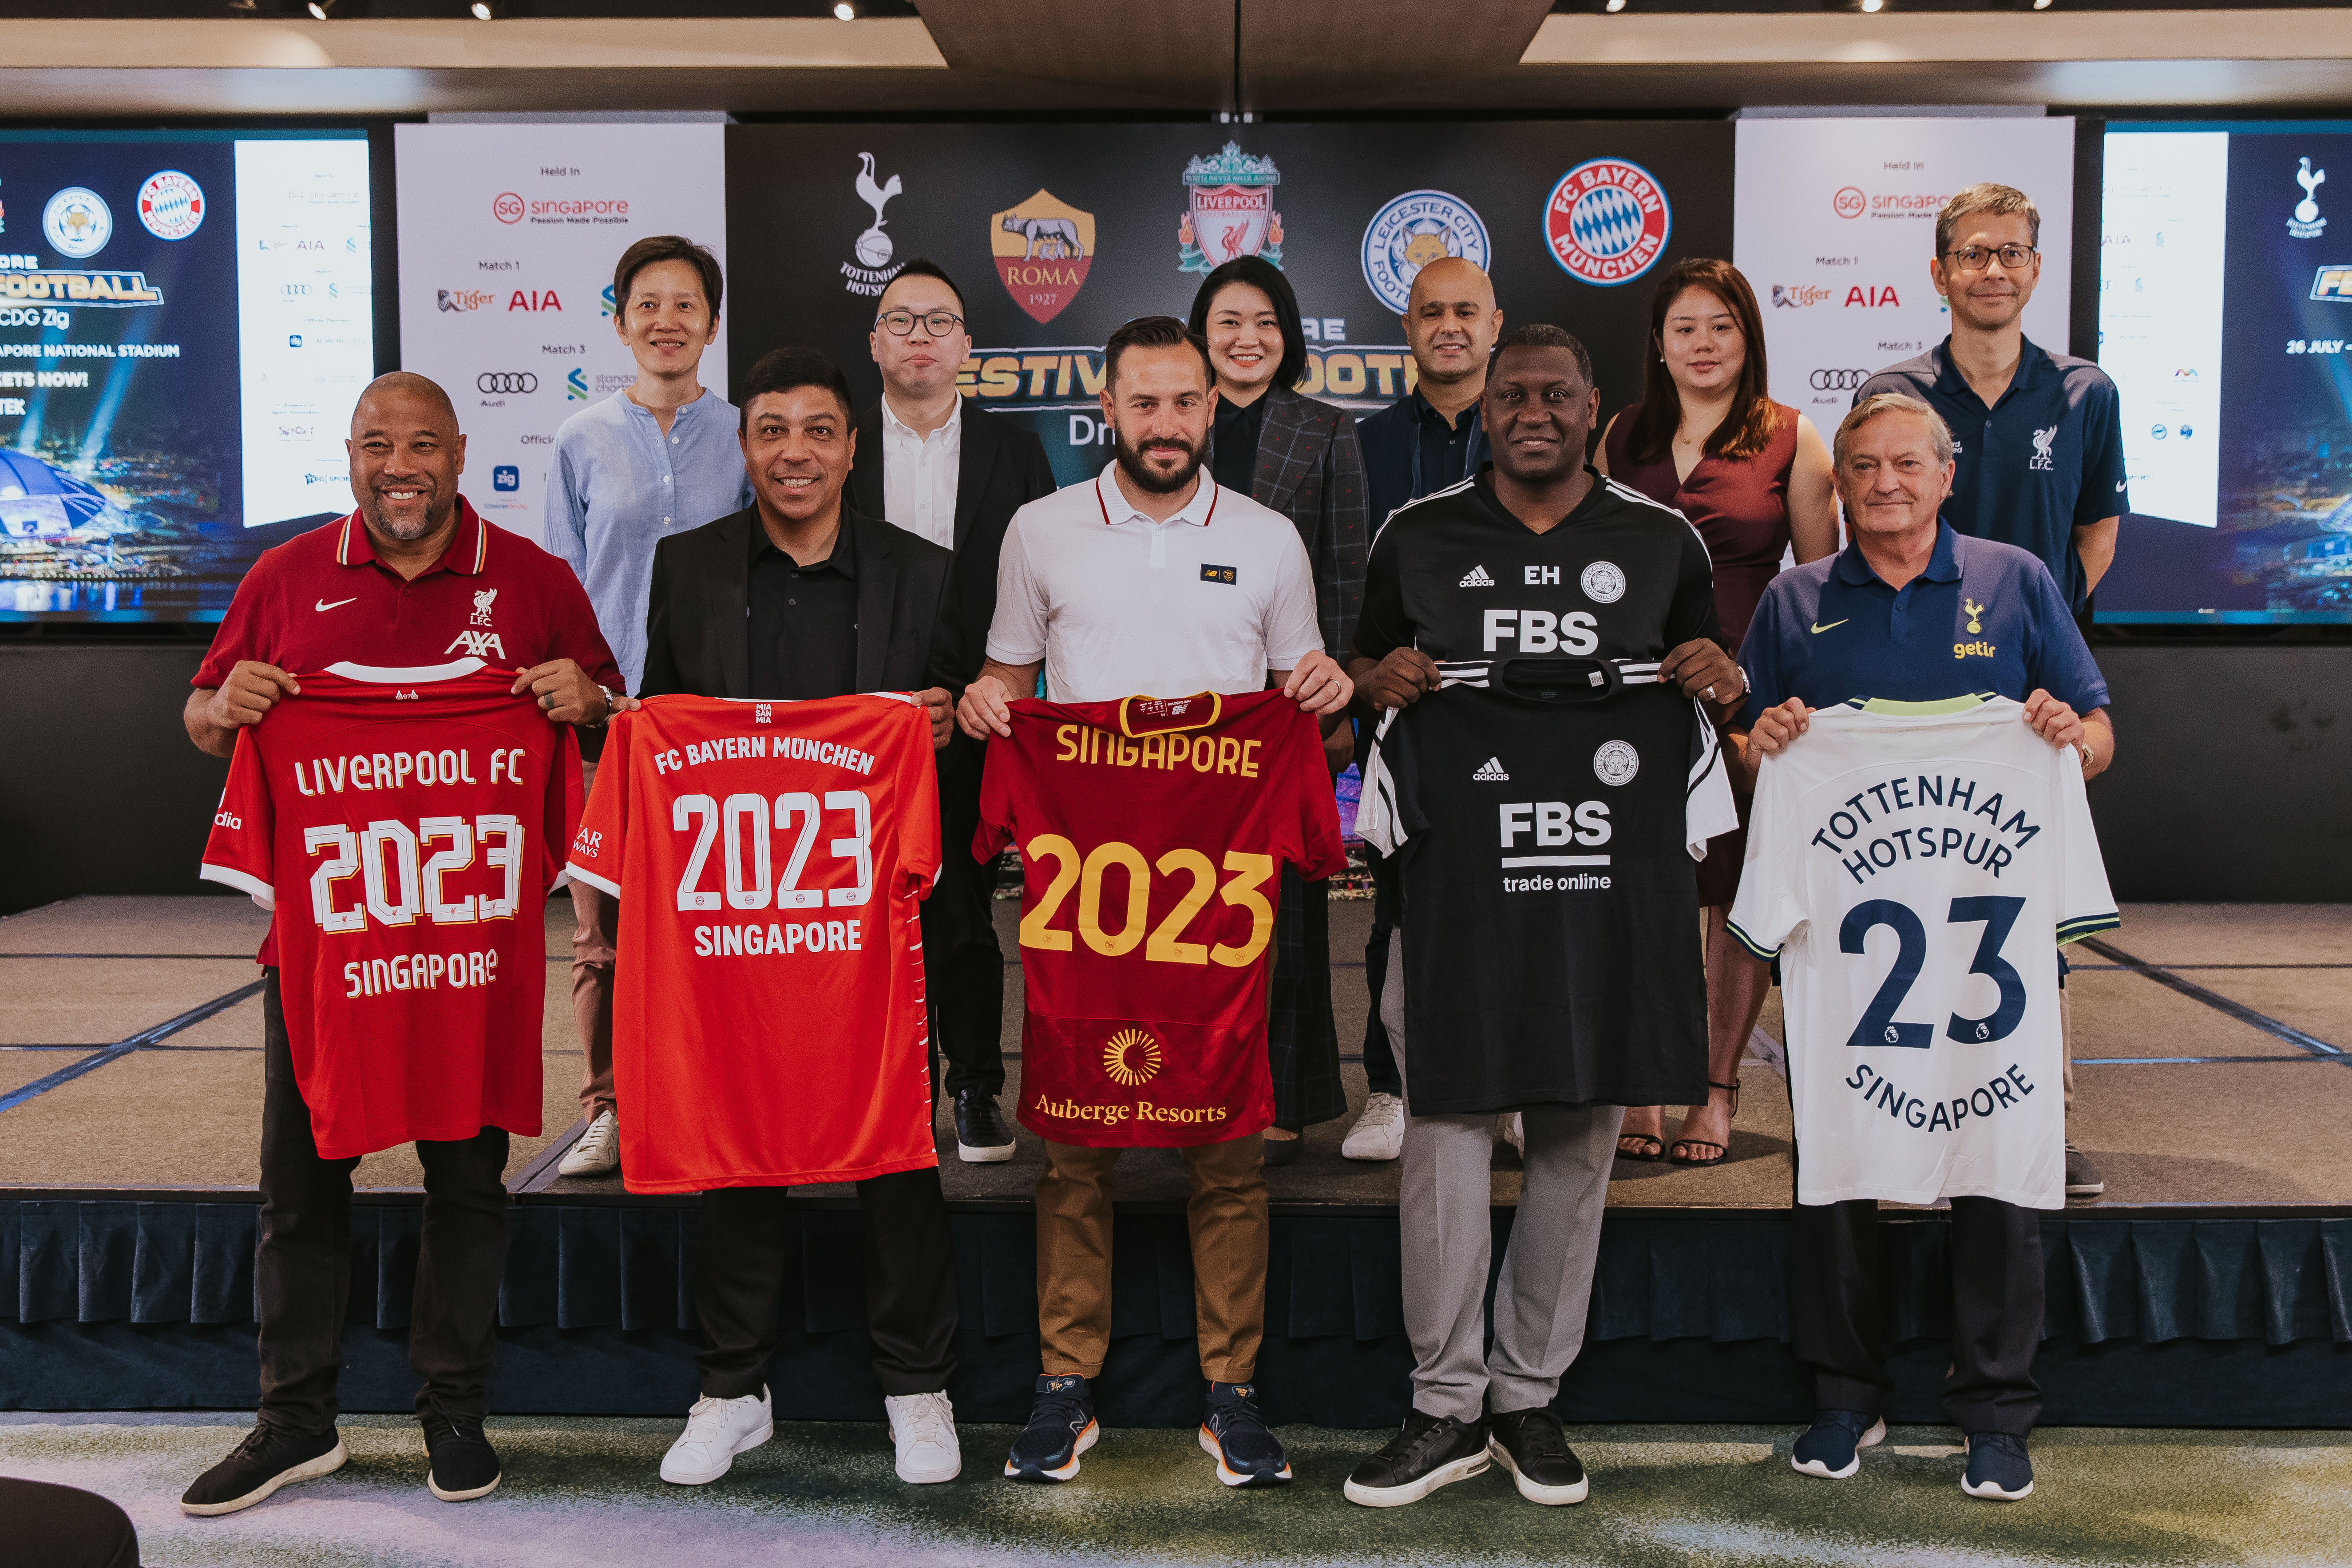 Top Football Clubs to Headline Singapore Festival of Football